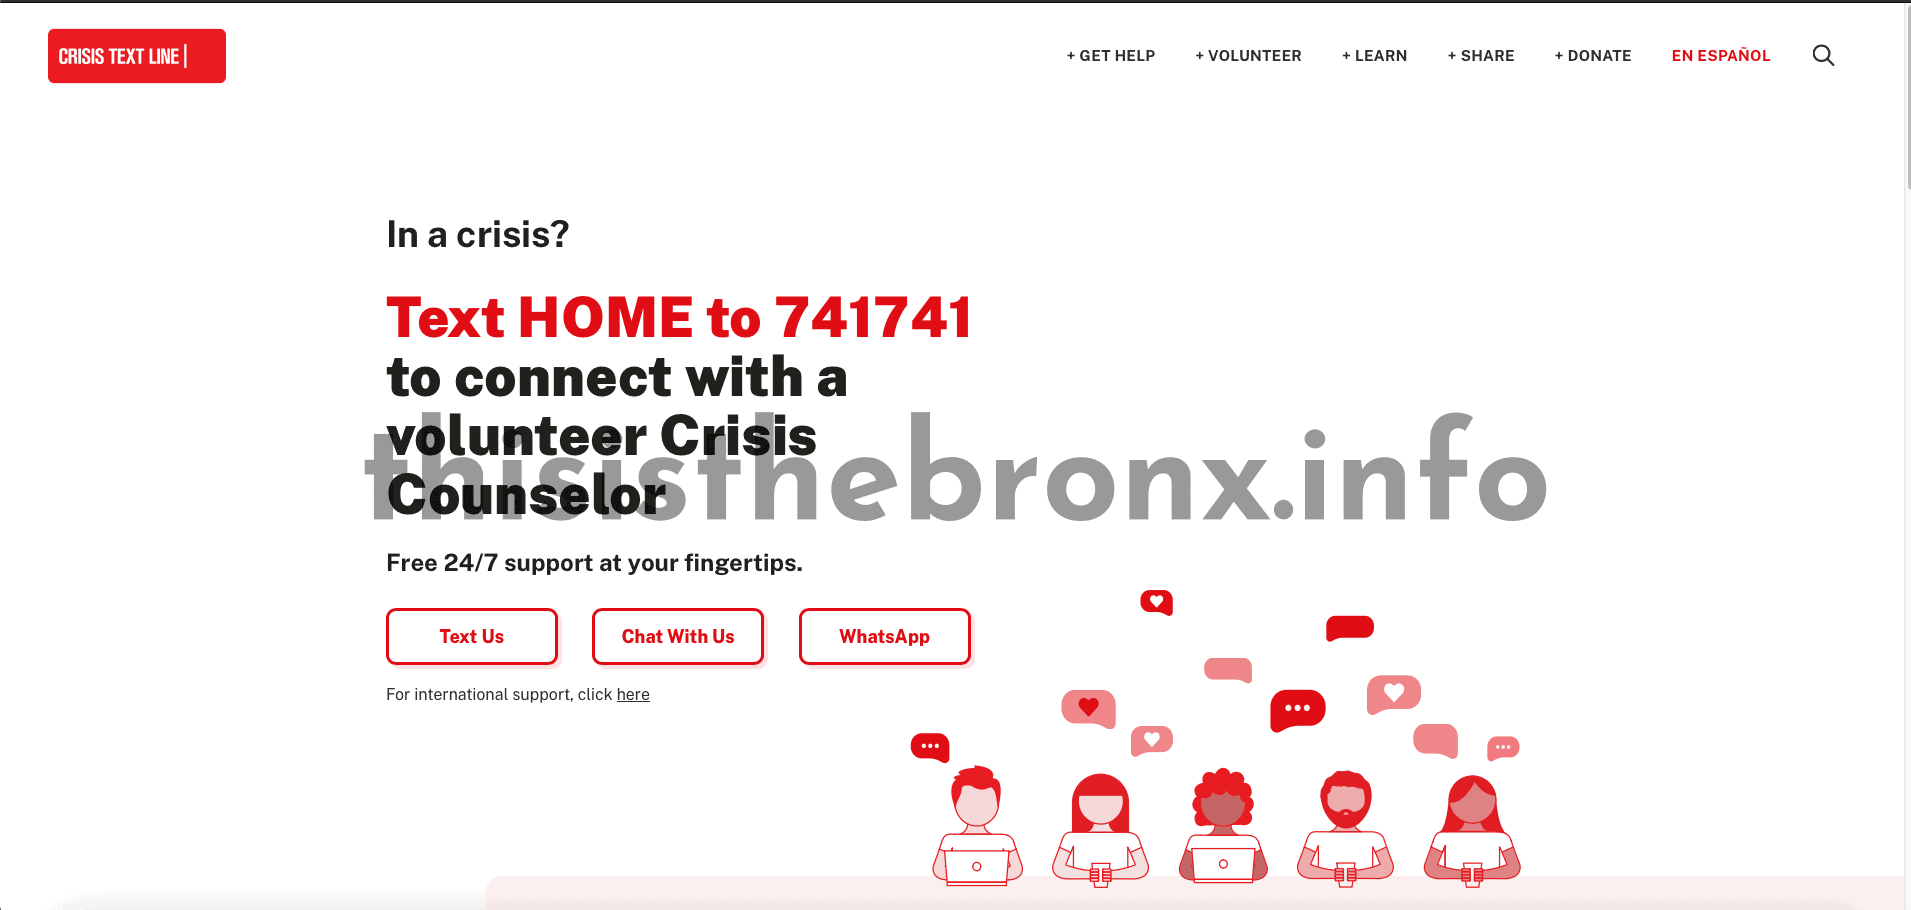 www.crisistextline.org